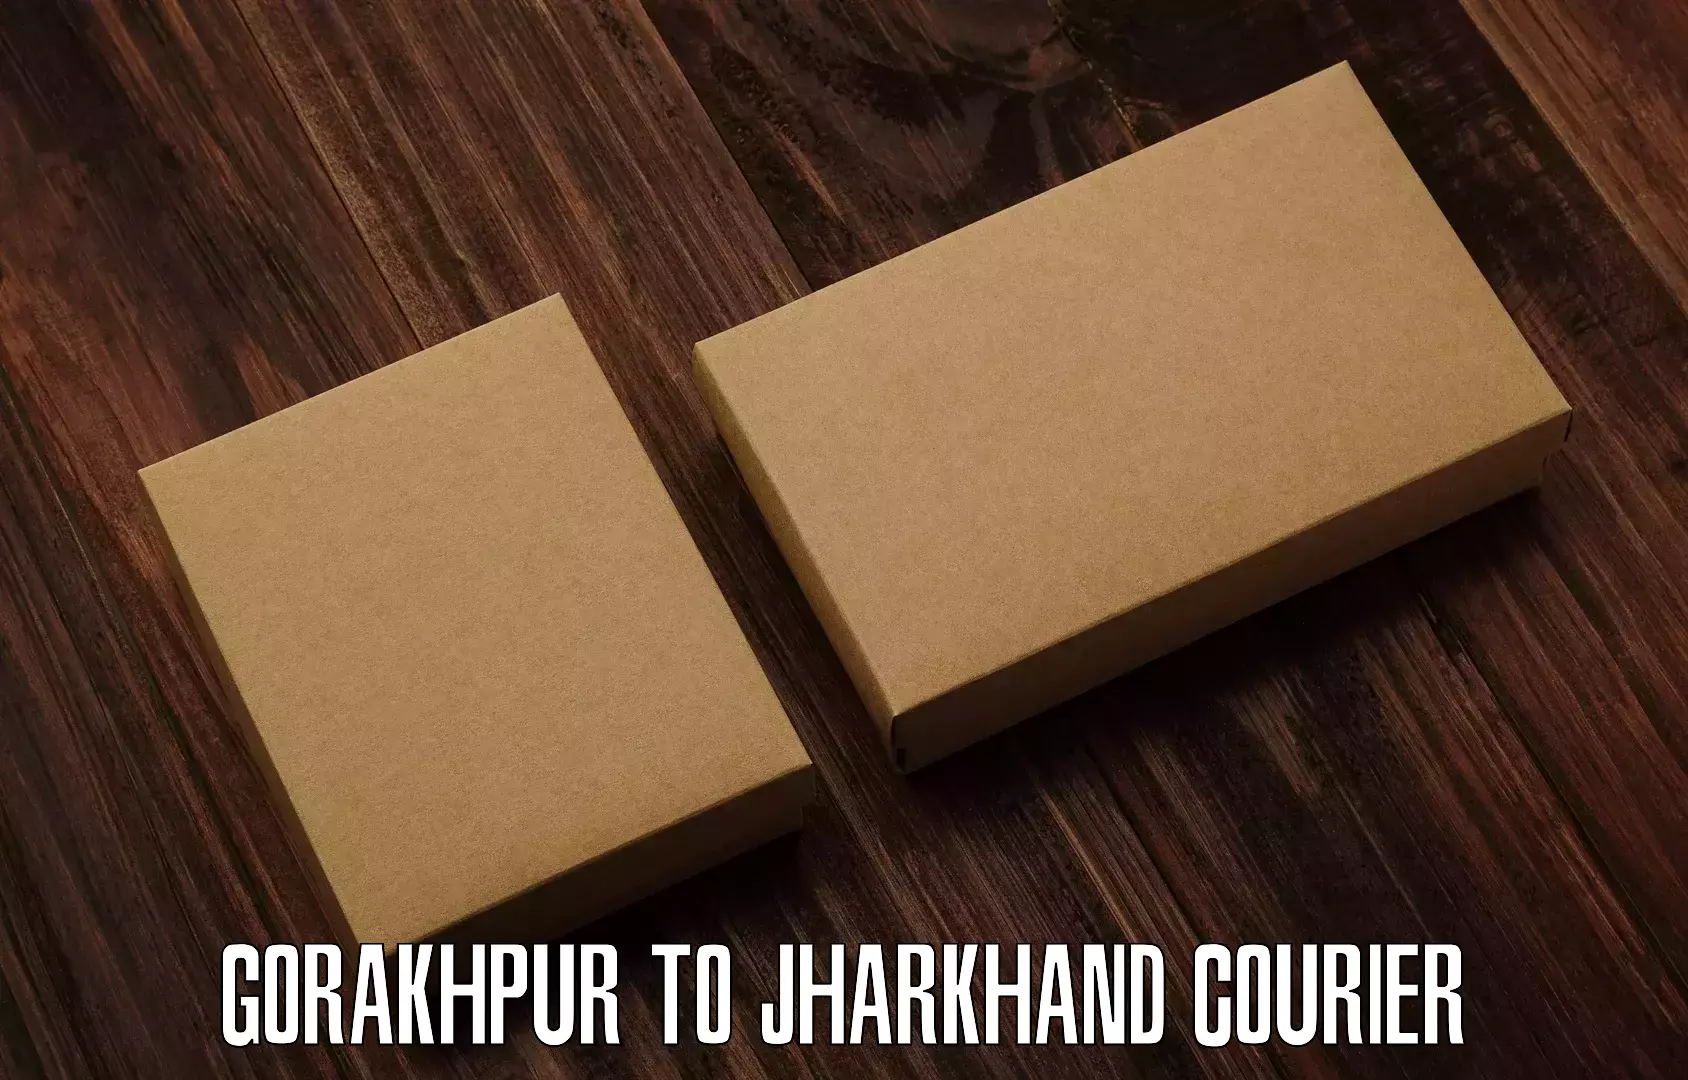 Courier service comparison Gorakhpur to Hazaribagh